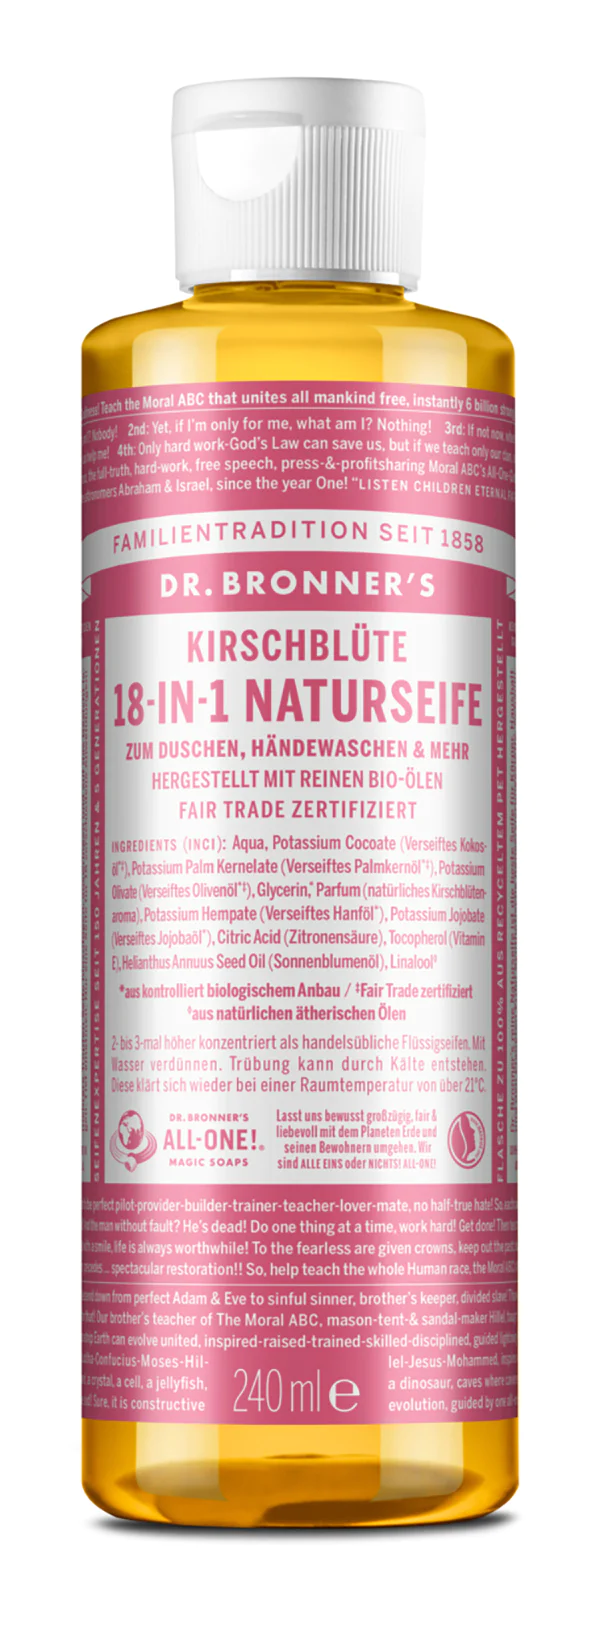 Dr. Bronner 18-IN-1 NATURSEIFE KirschblÃ¼te 240ml